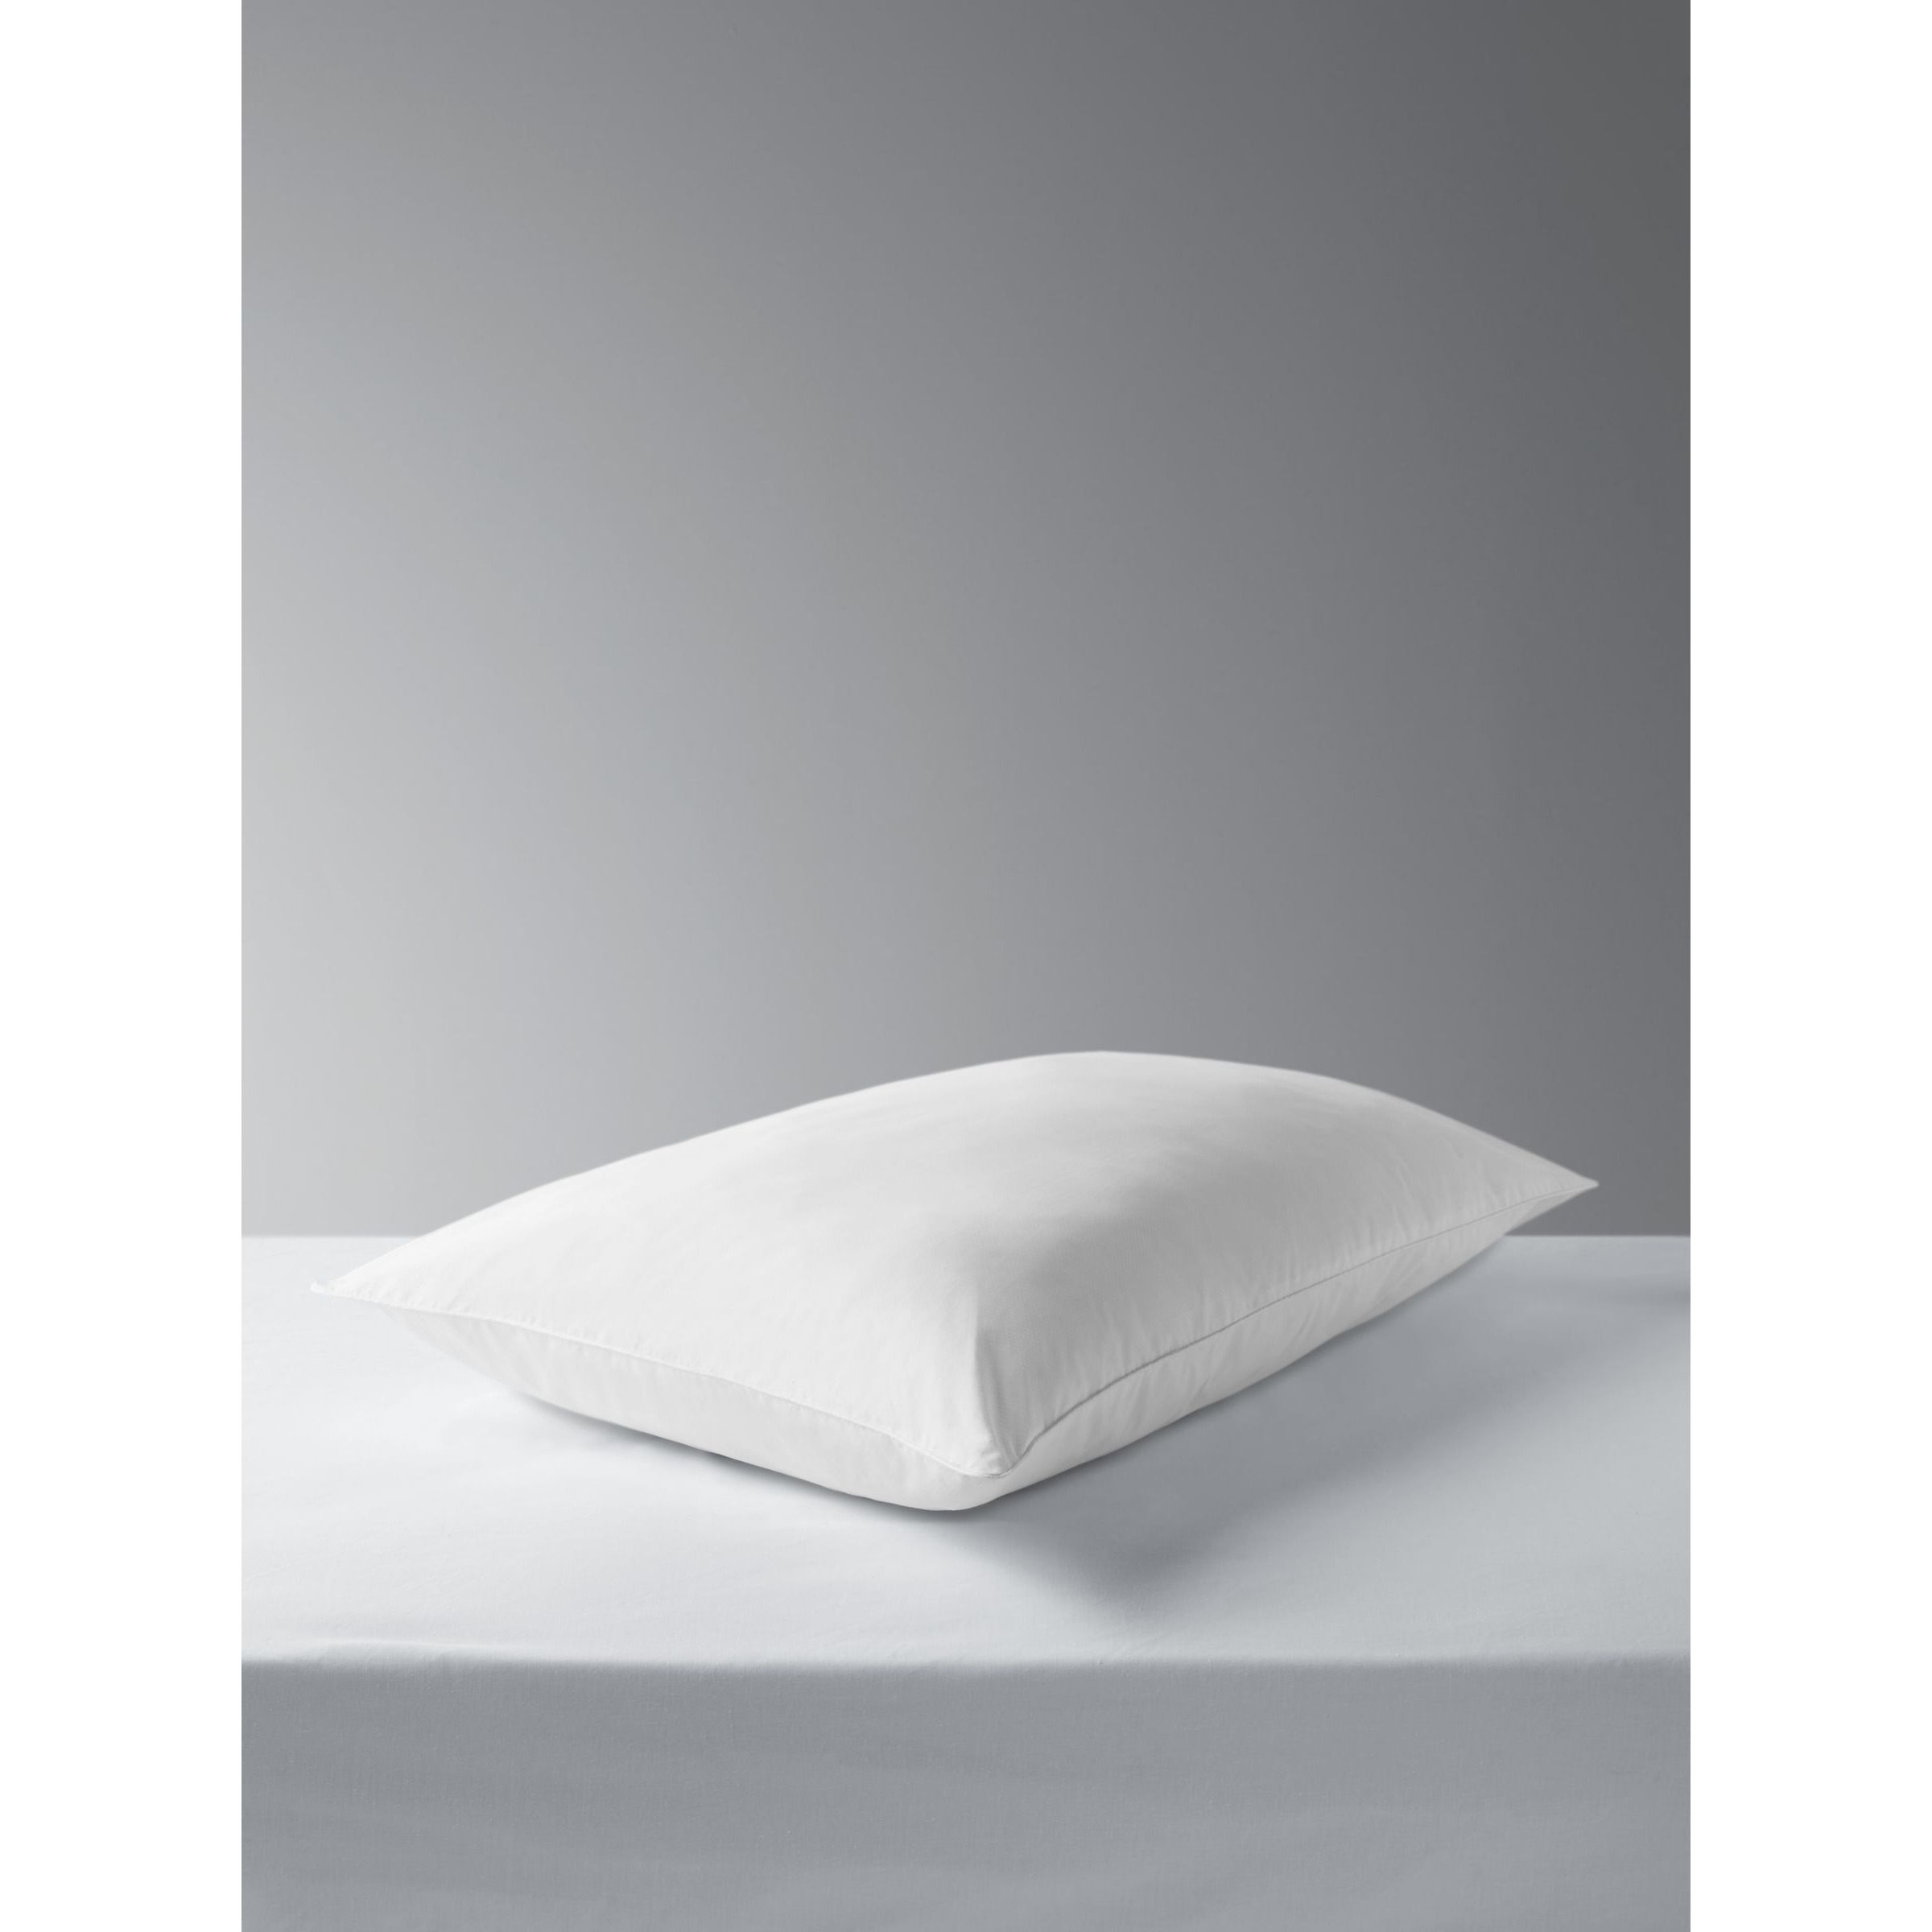 John Lewis Temperature Regulating Breathable Standard Pillow, Medium/Firm - image 1